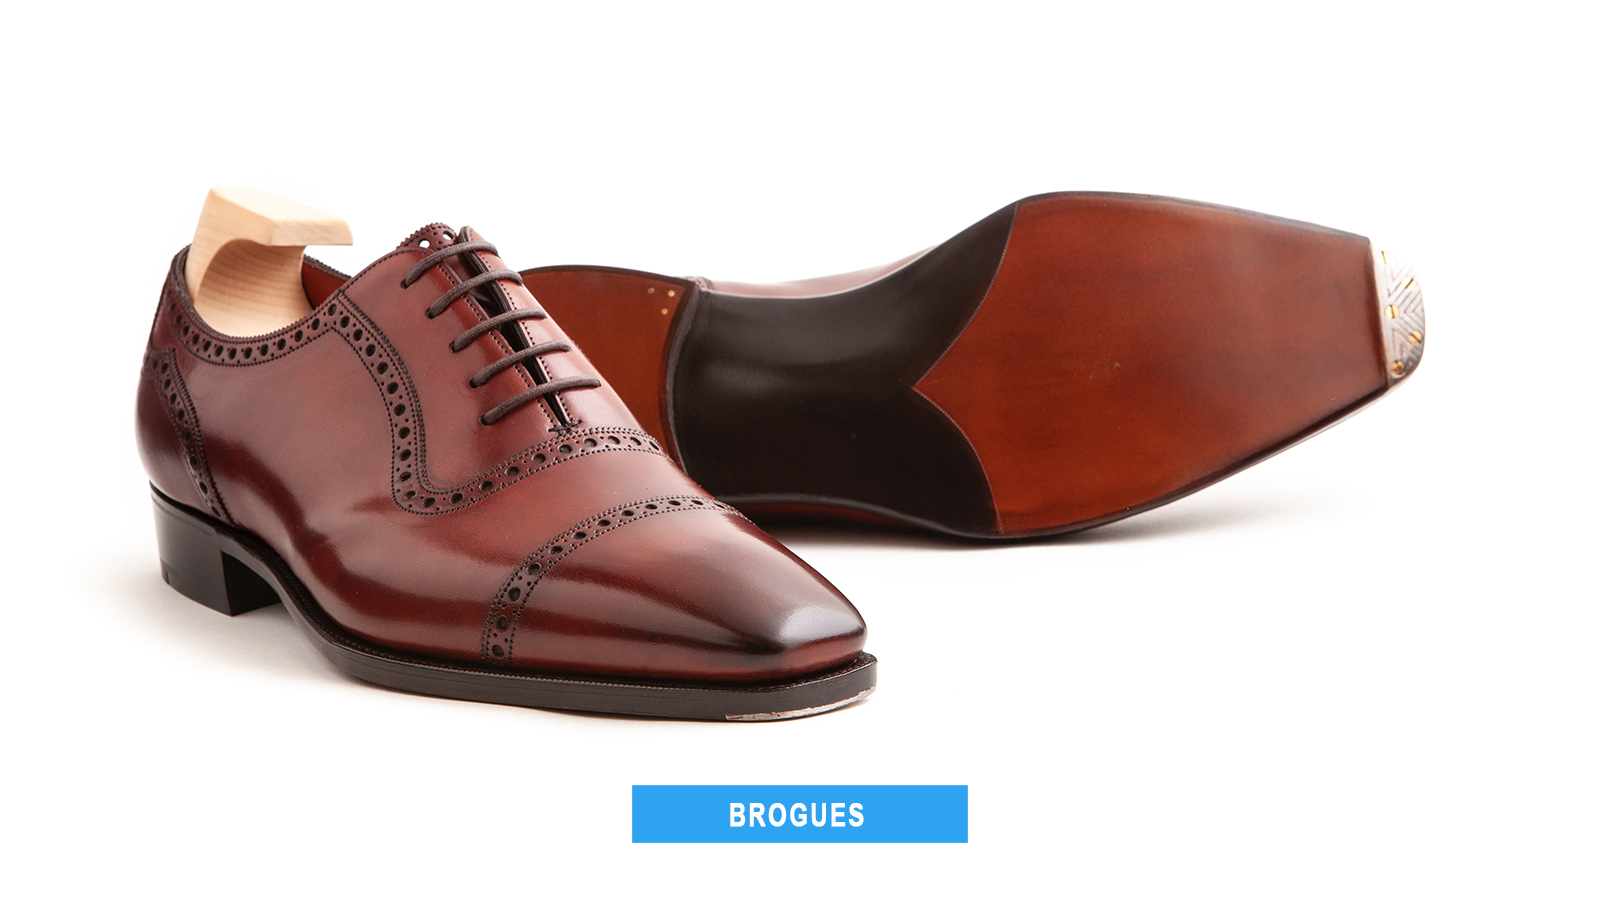 burgundy brogues dress shoe style